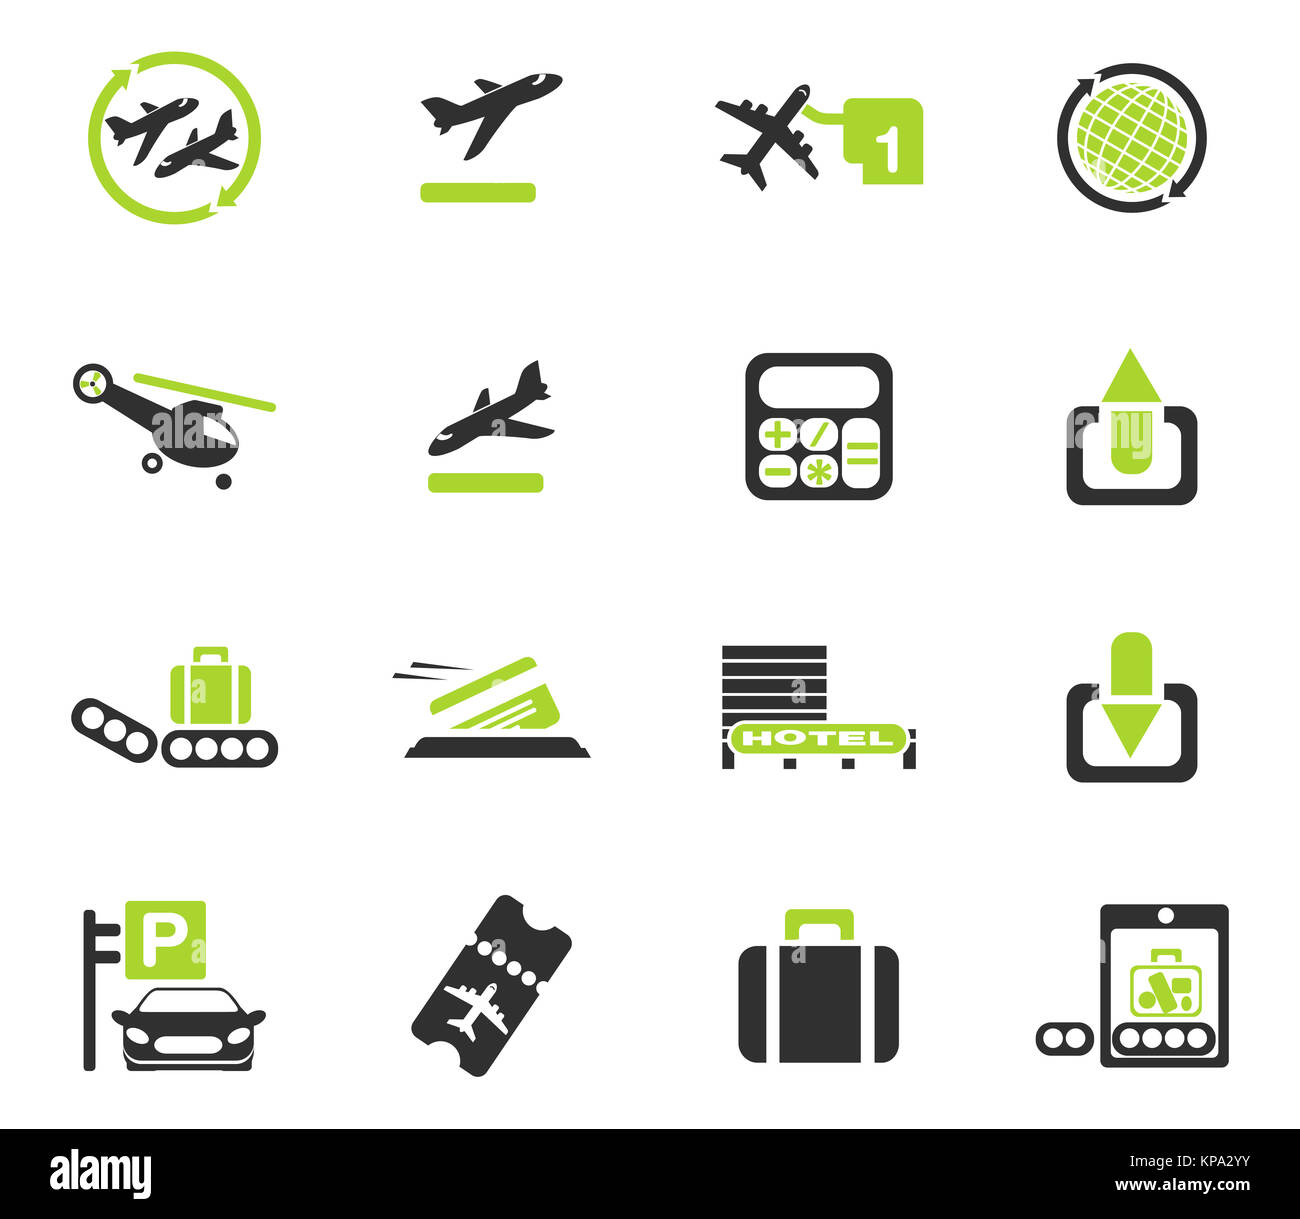 Airport icons Stock Photo